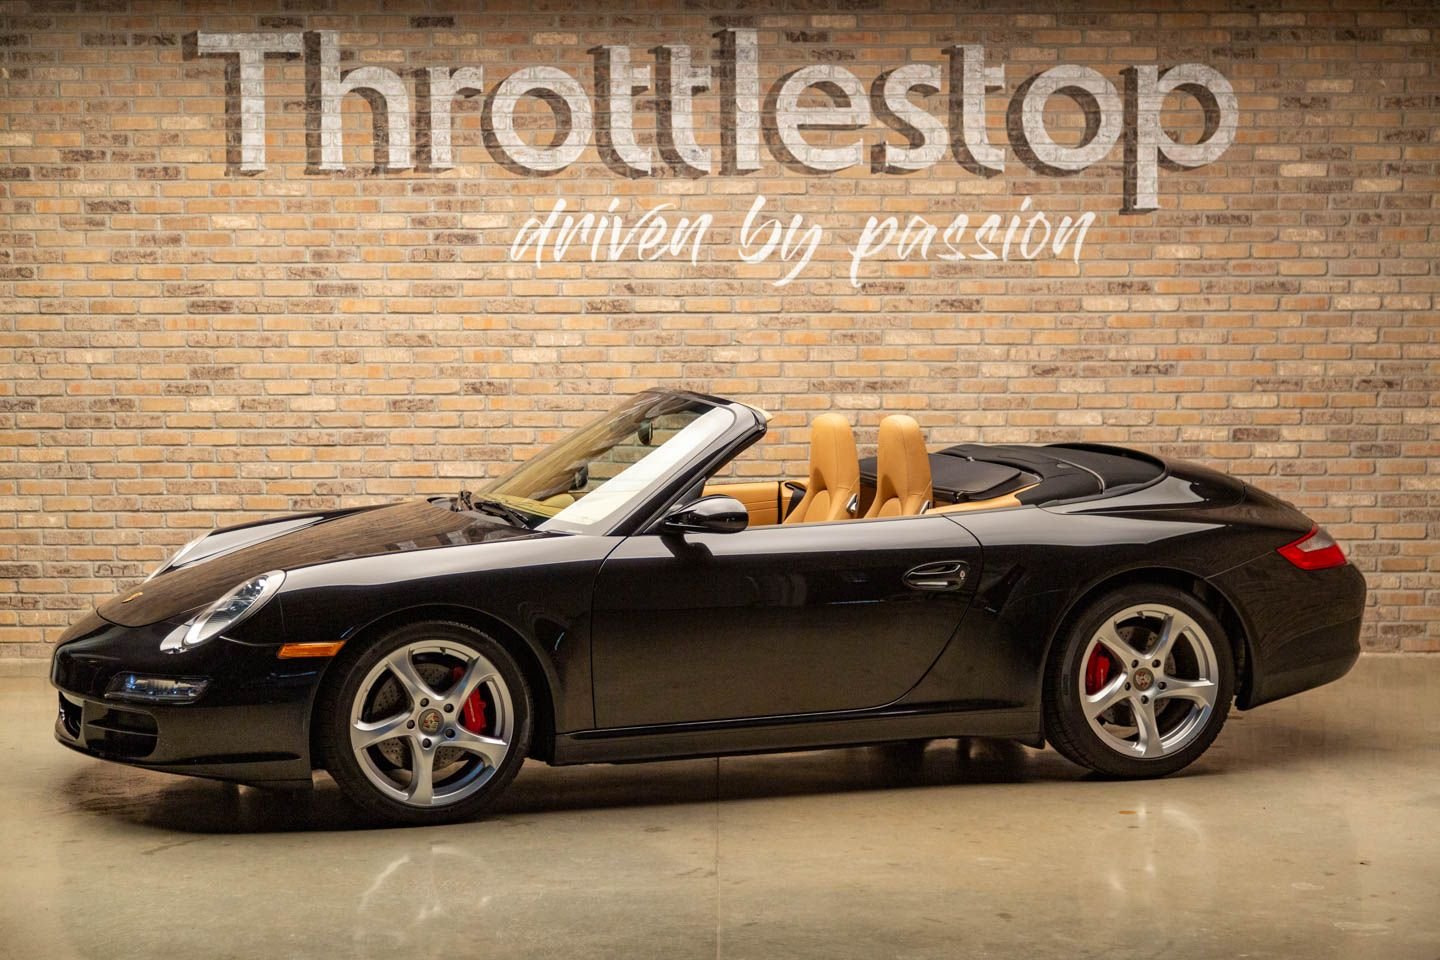 6798 | 2008 Porsche 911 Carrera S Cabriolet | Throttlestop | Automotive and Motorcycle Consignment Dealer